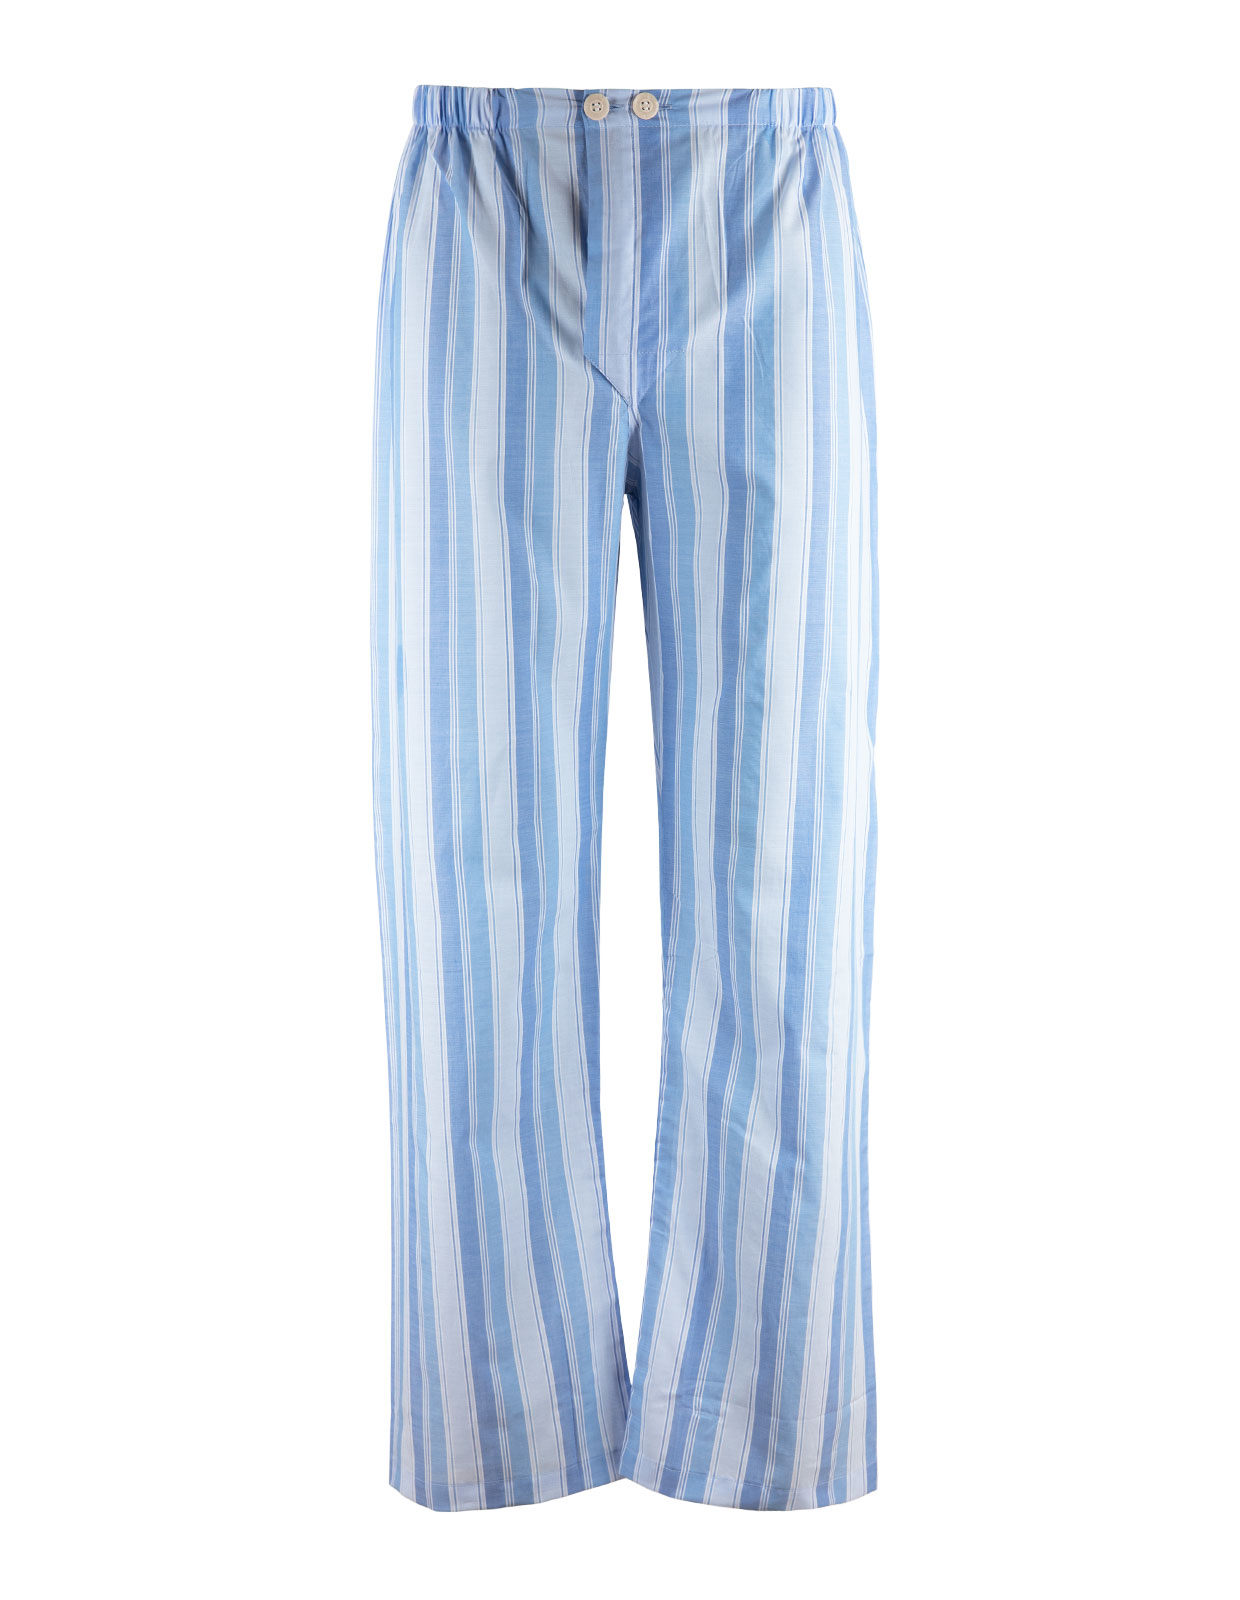 Saville Pyjamas Blå / Vit Stl 52